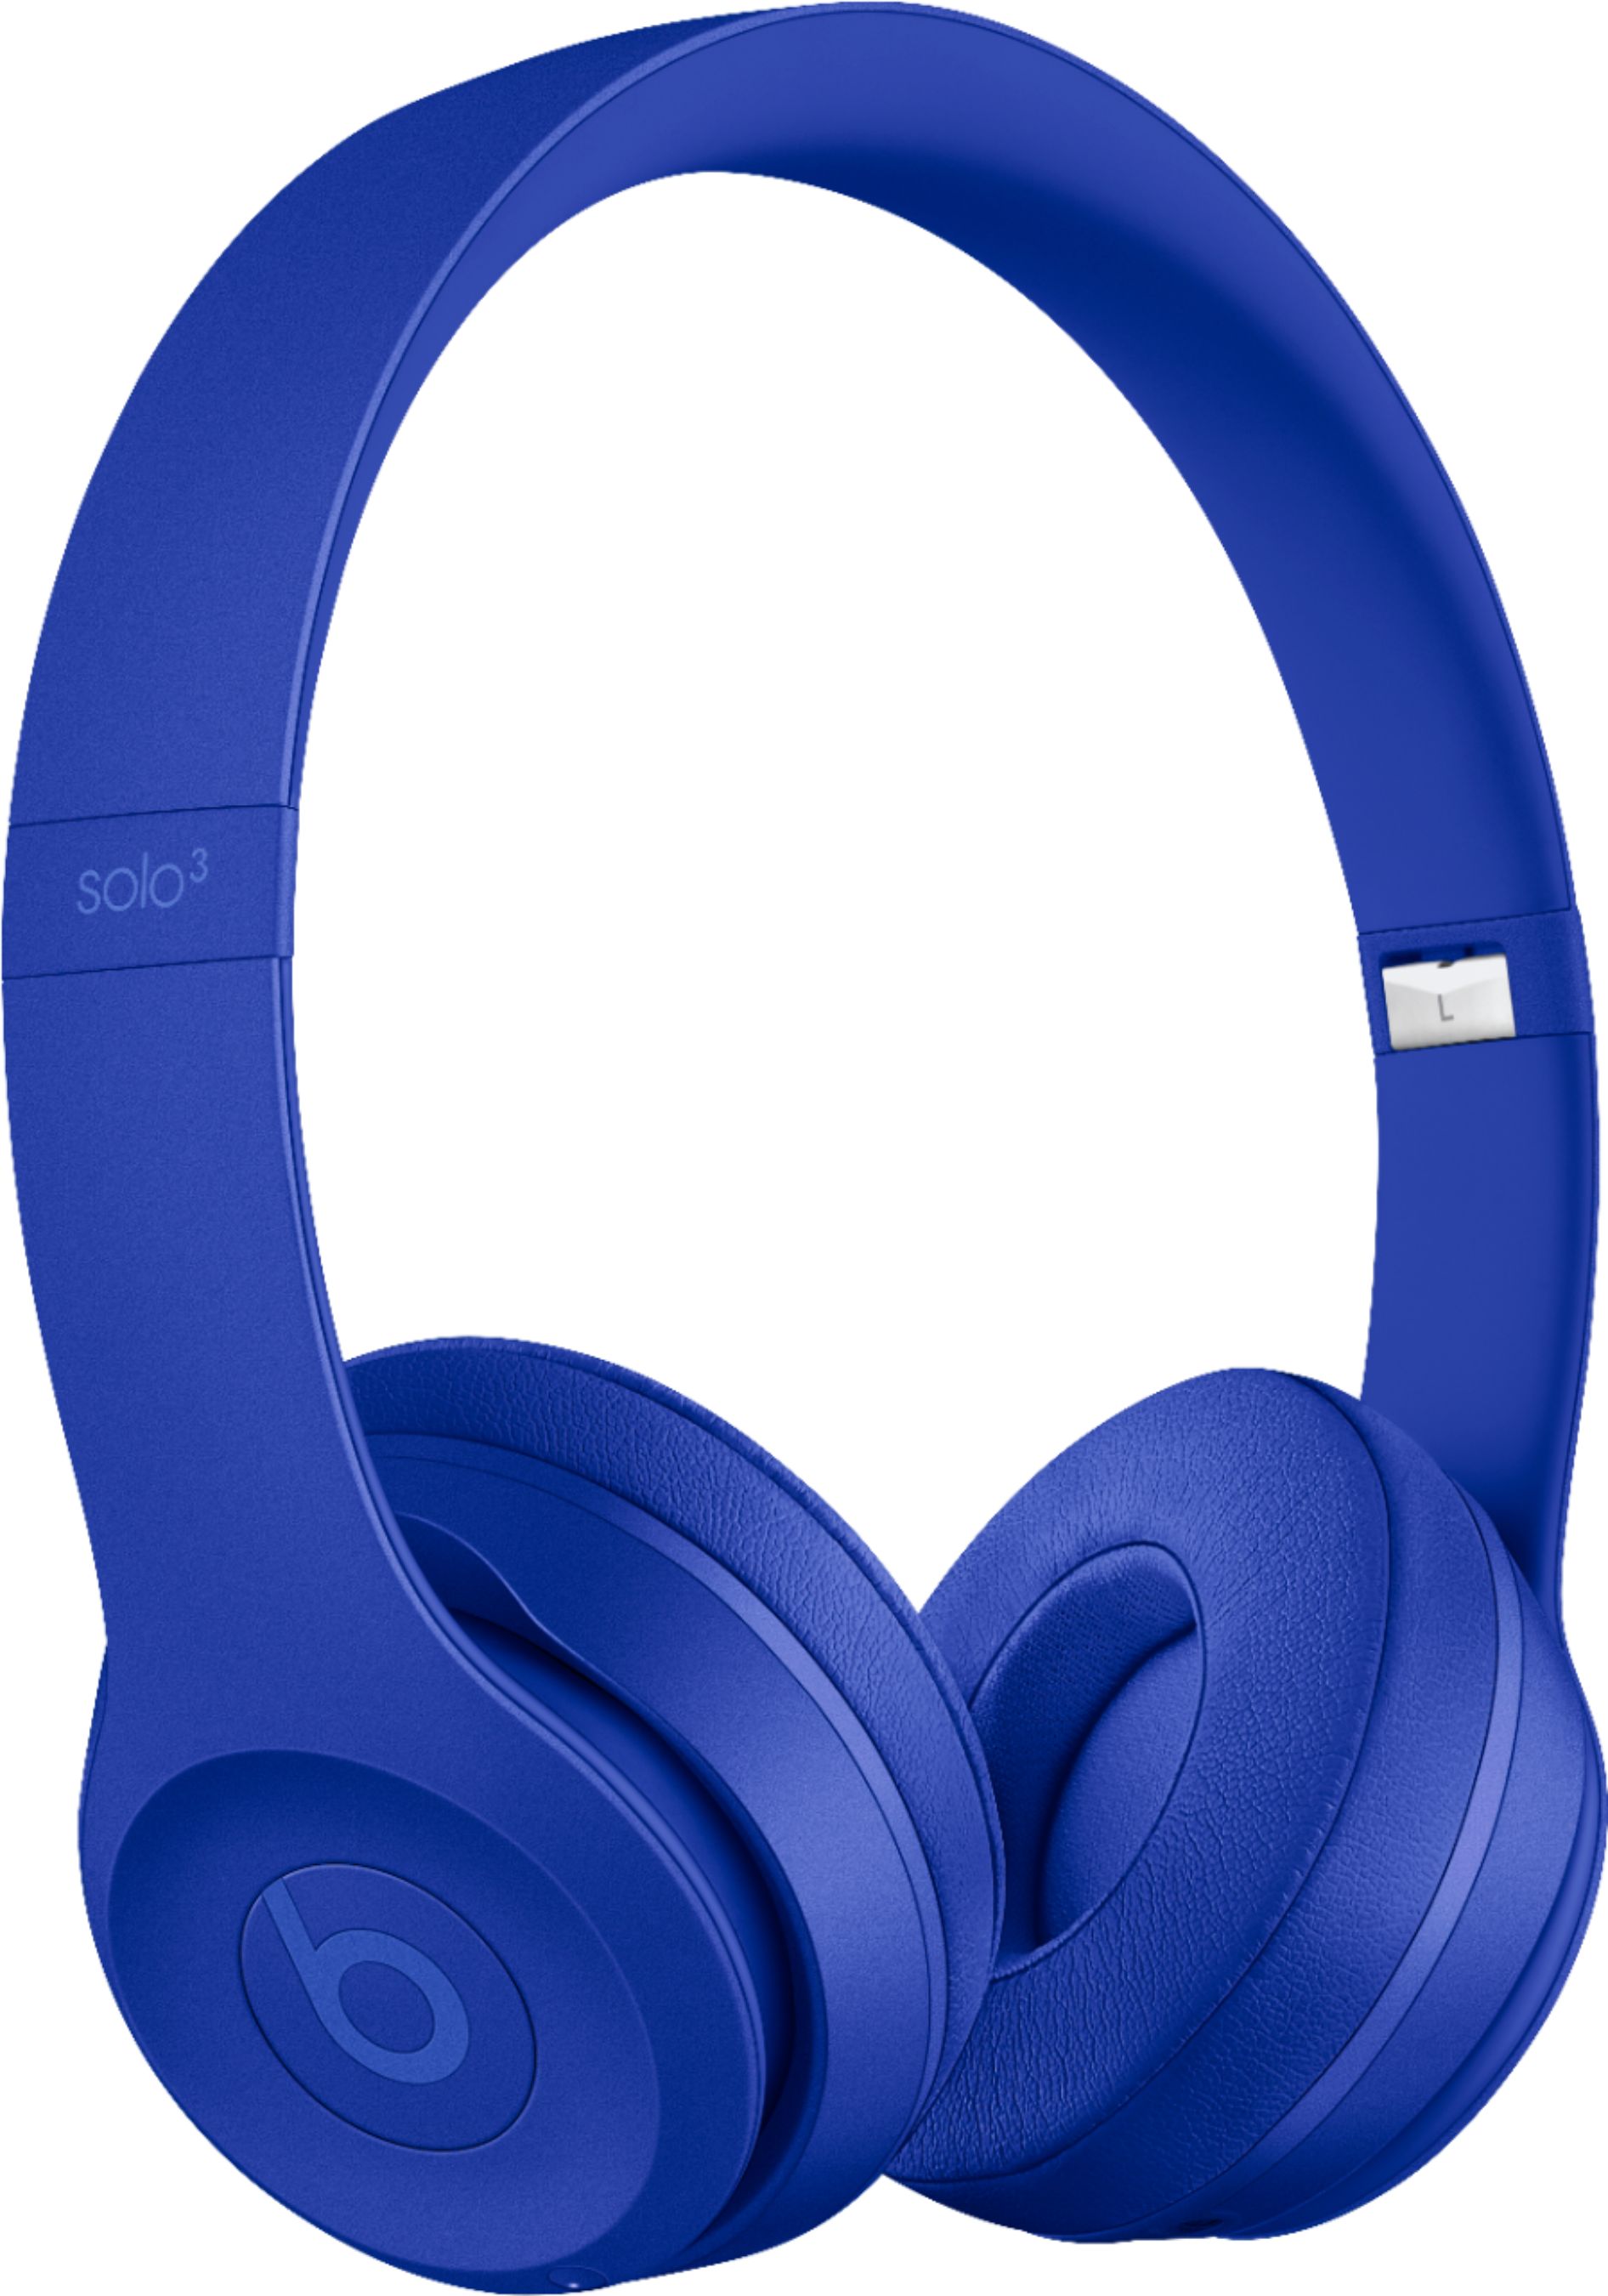 beats headphones wireless blue